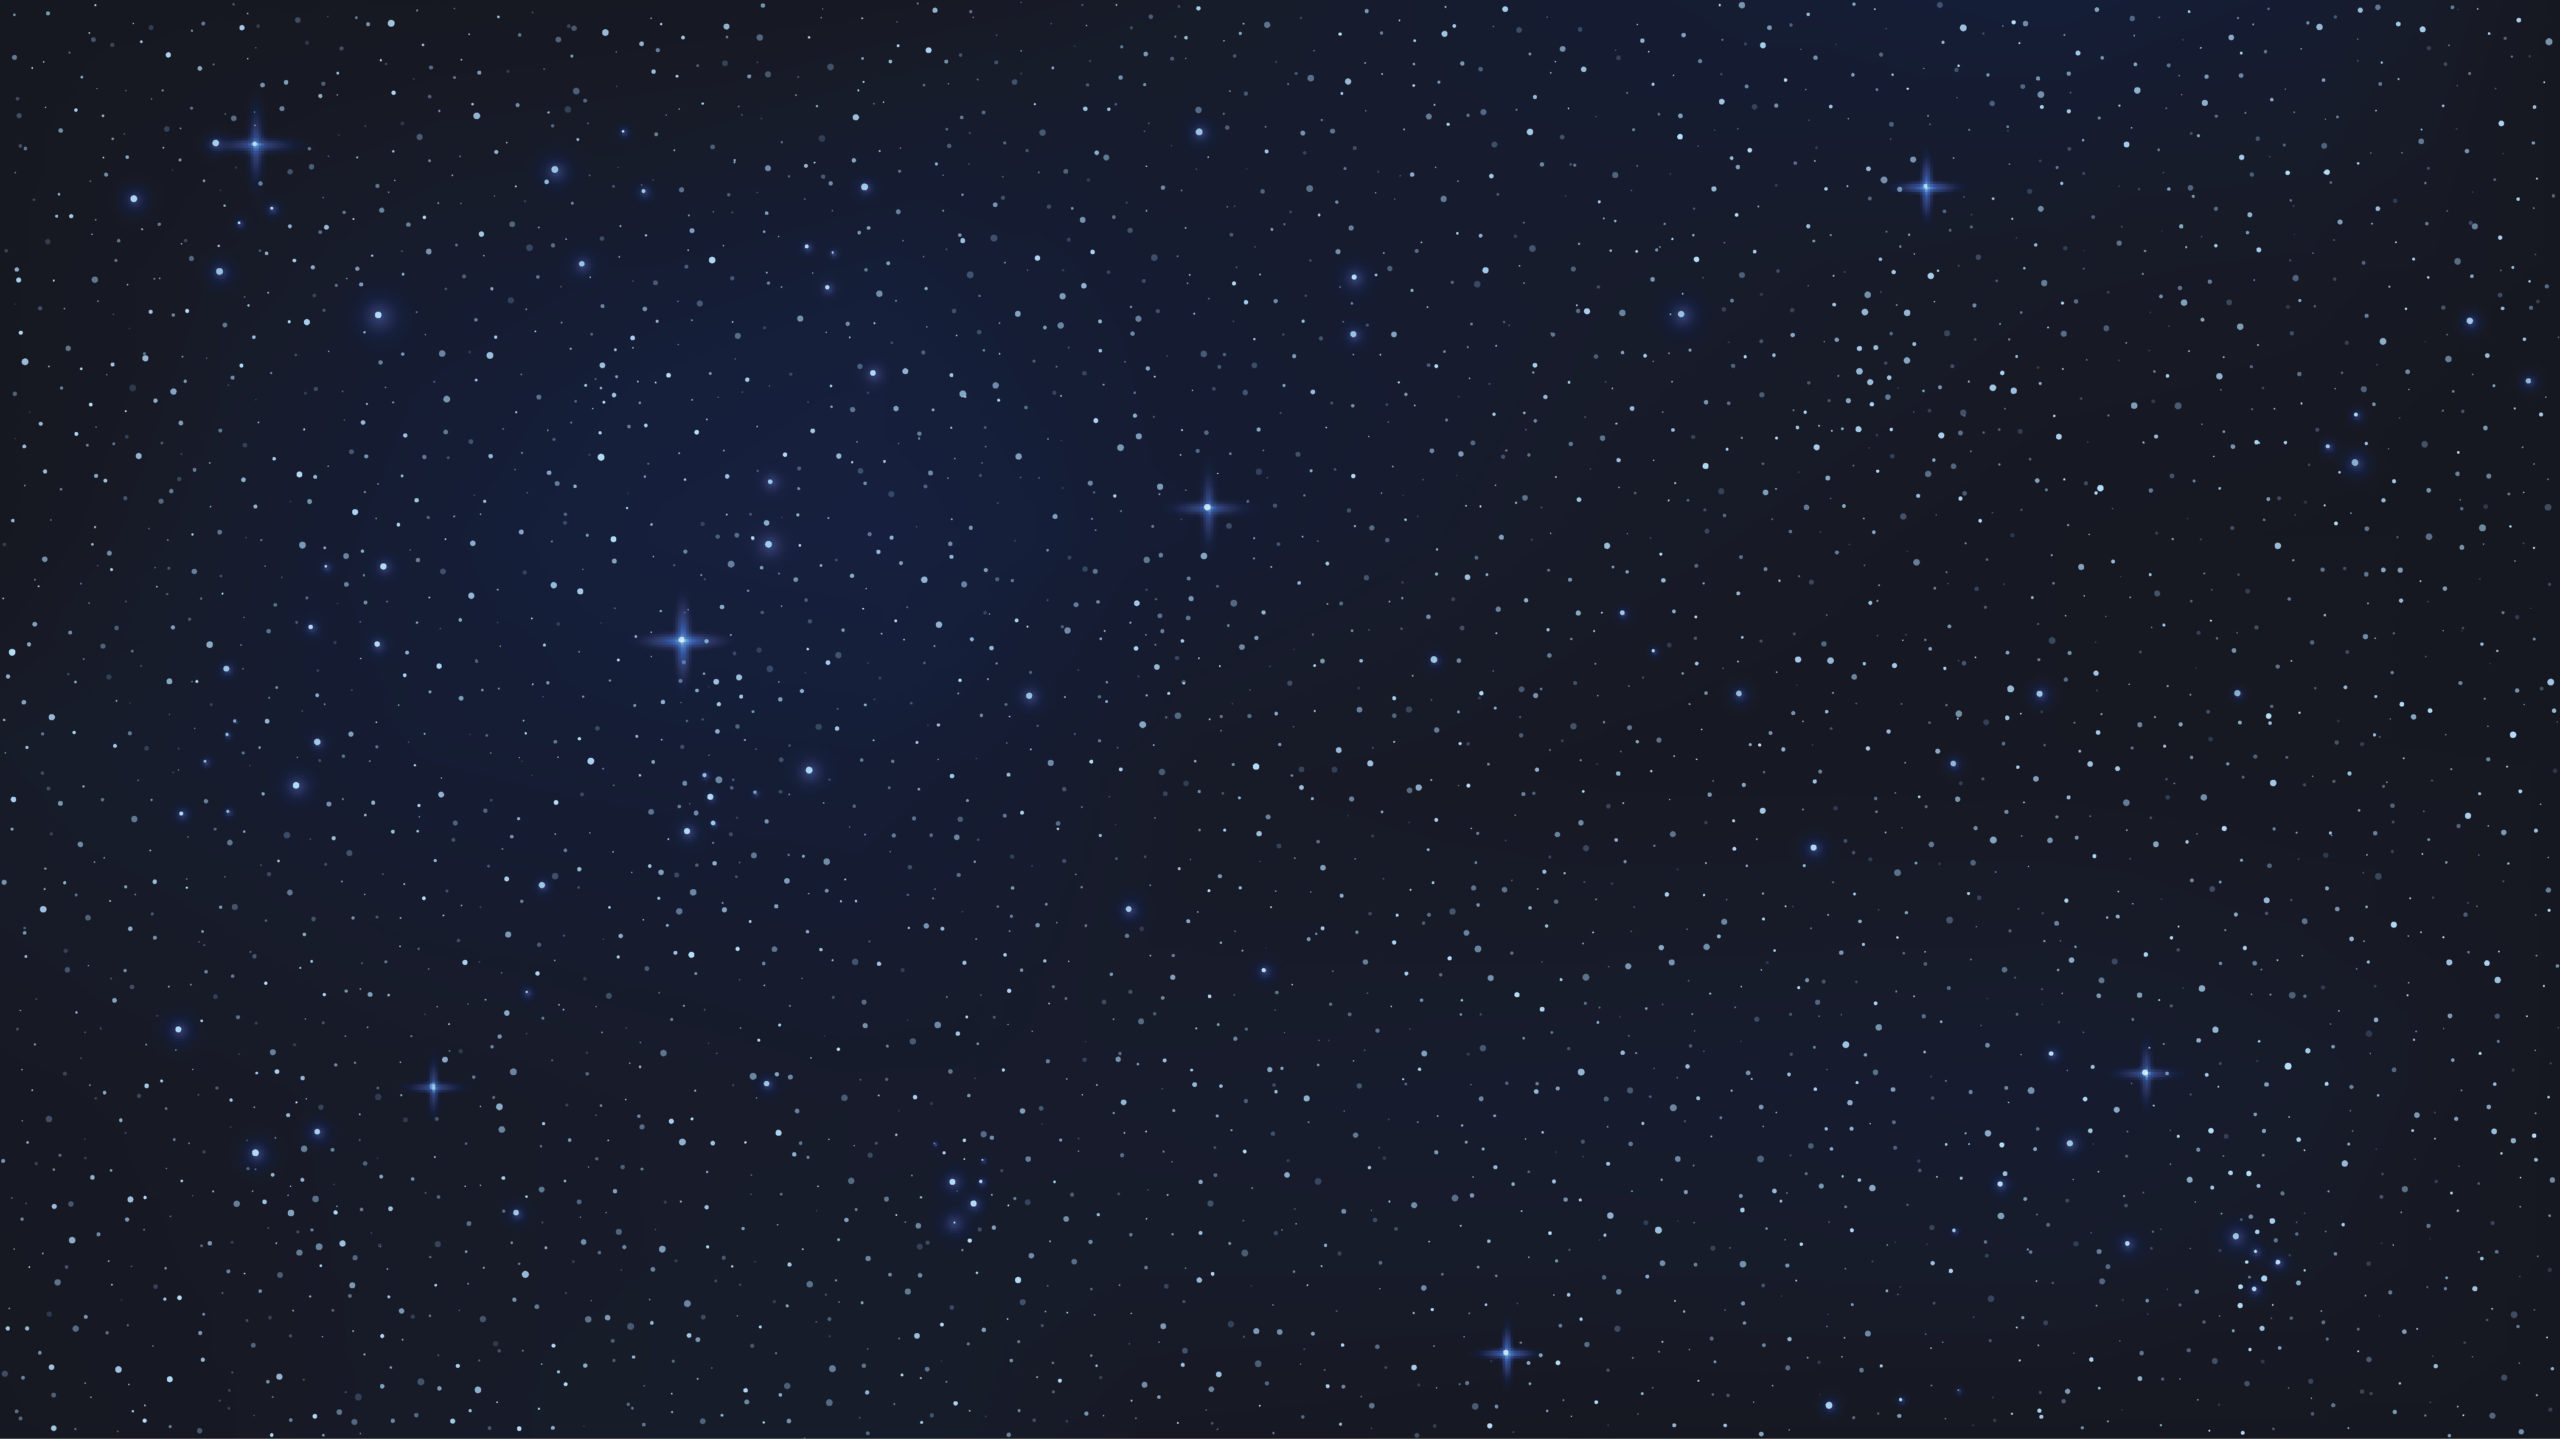 Shining stars glow in the dark sky background Vector Image